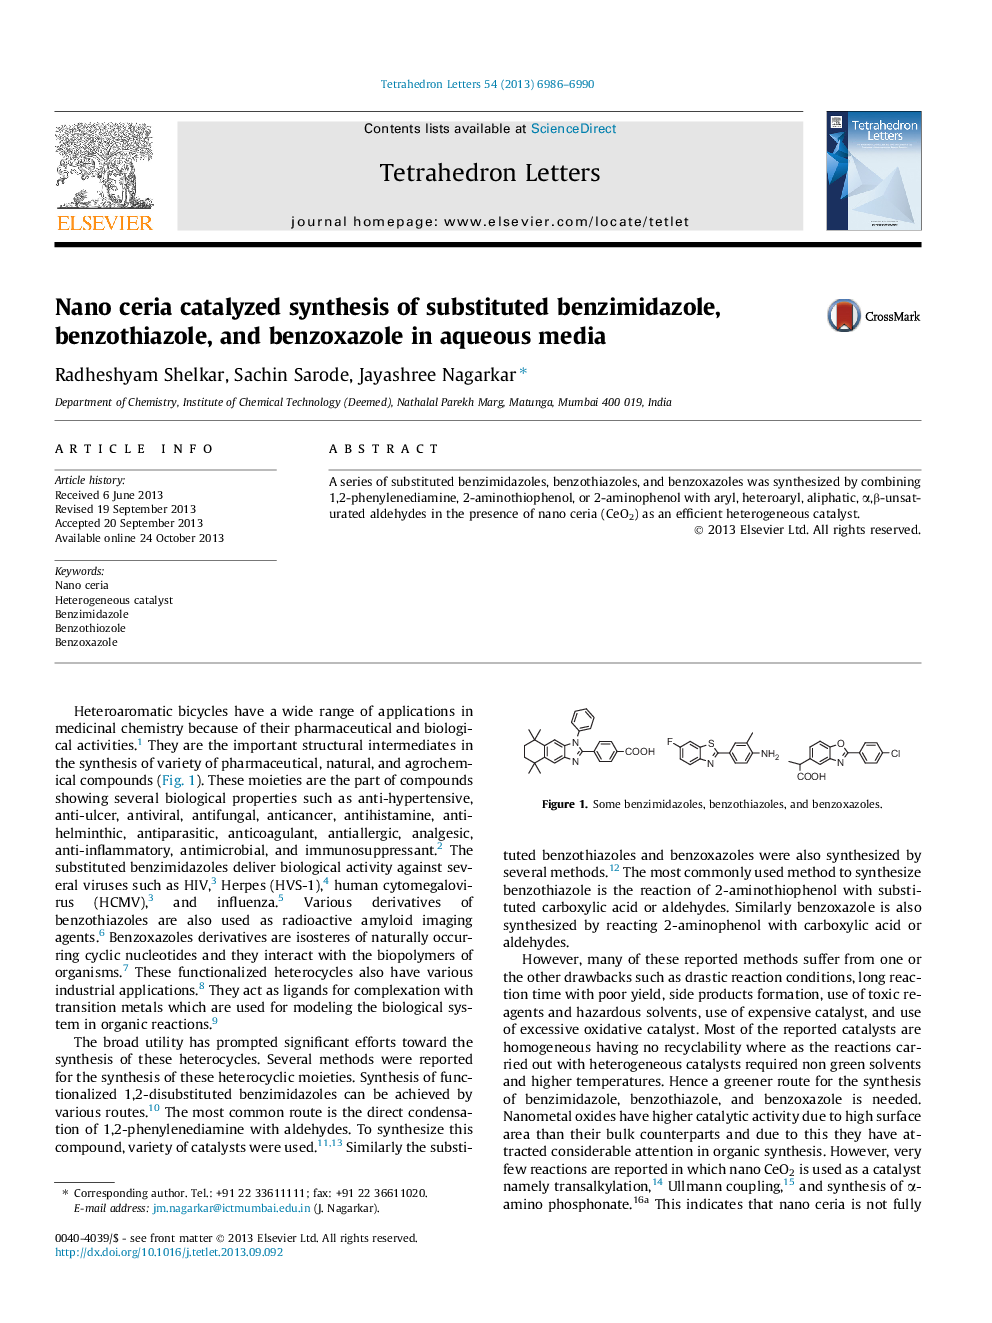 Nano ceria catalyzed synthesis of substituted benzimidazole, benzothiazole, and benzoxazole in aqueous media